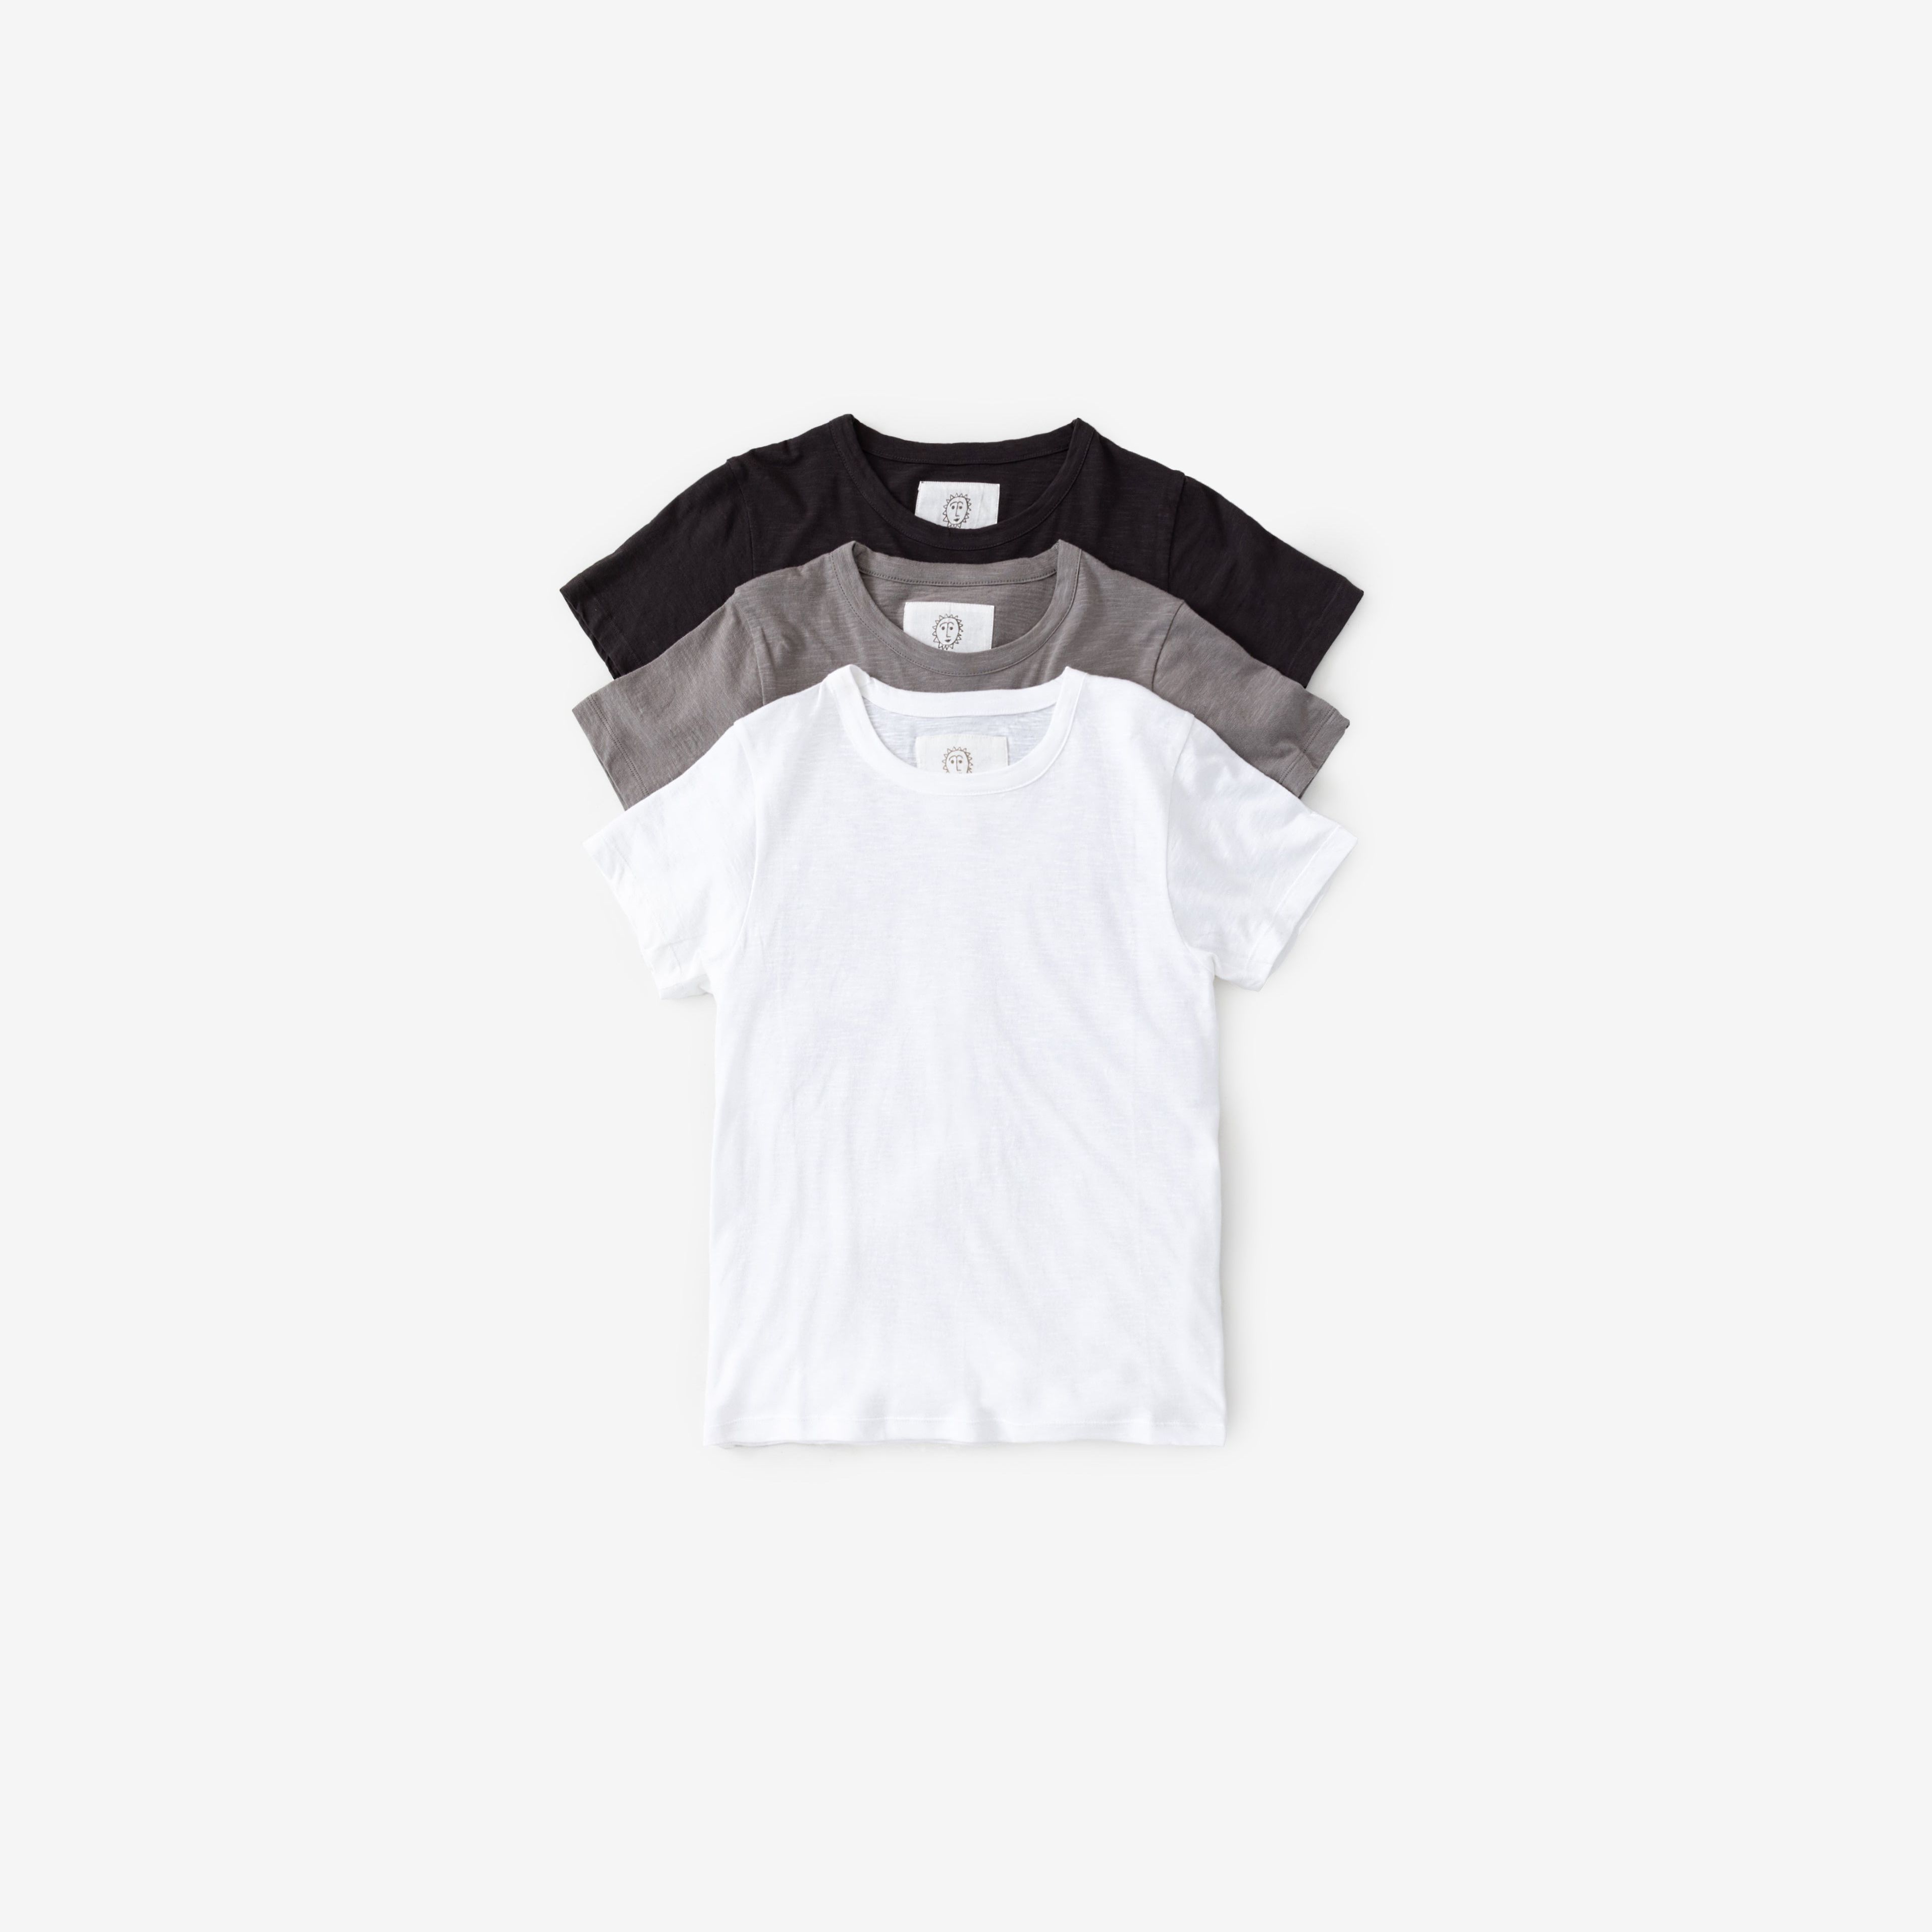 Saturday Tee - Knit T-Shirt 3-Pack - Black/Cloud/Pebble